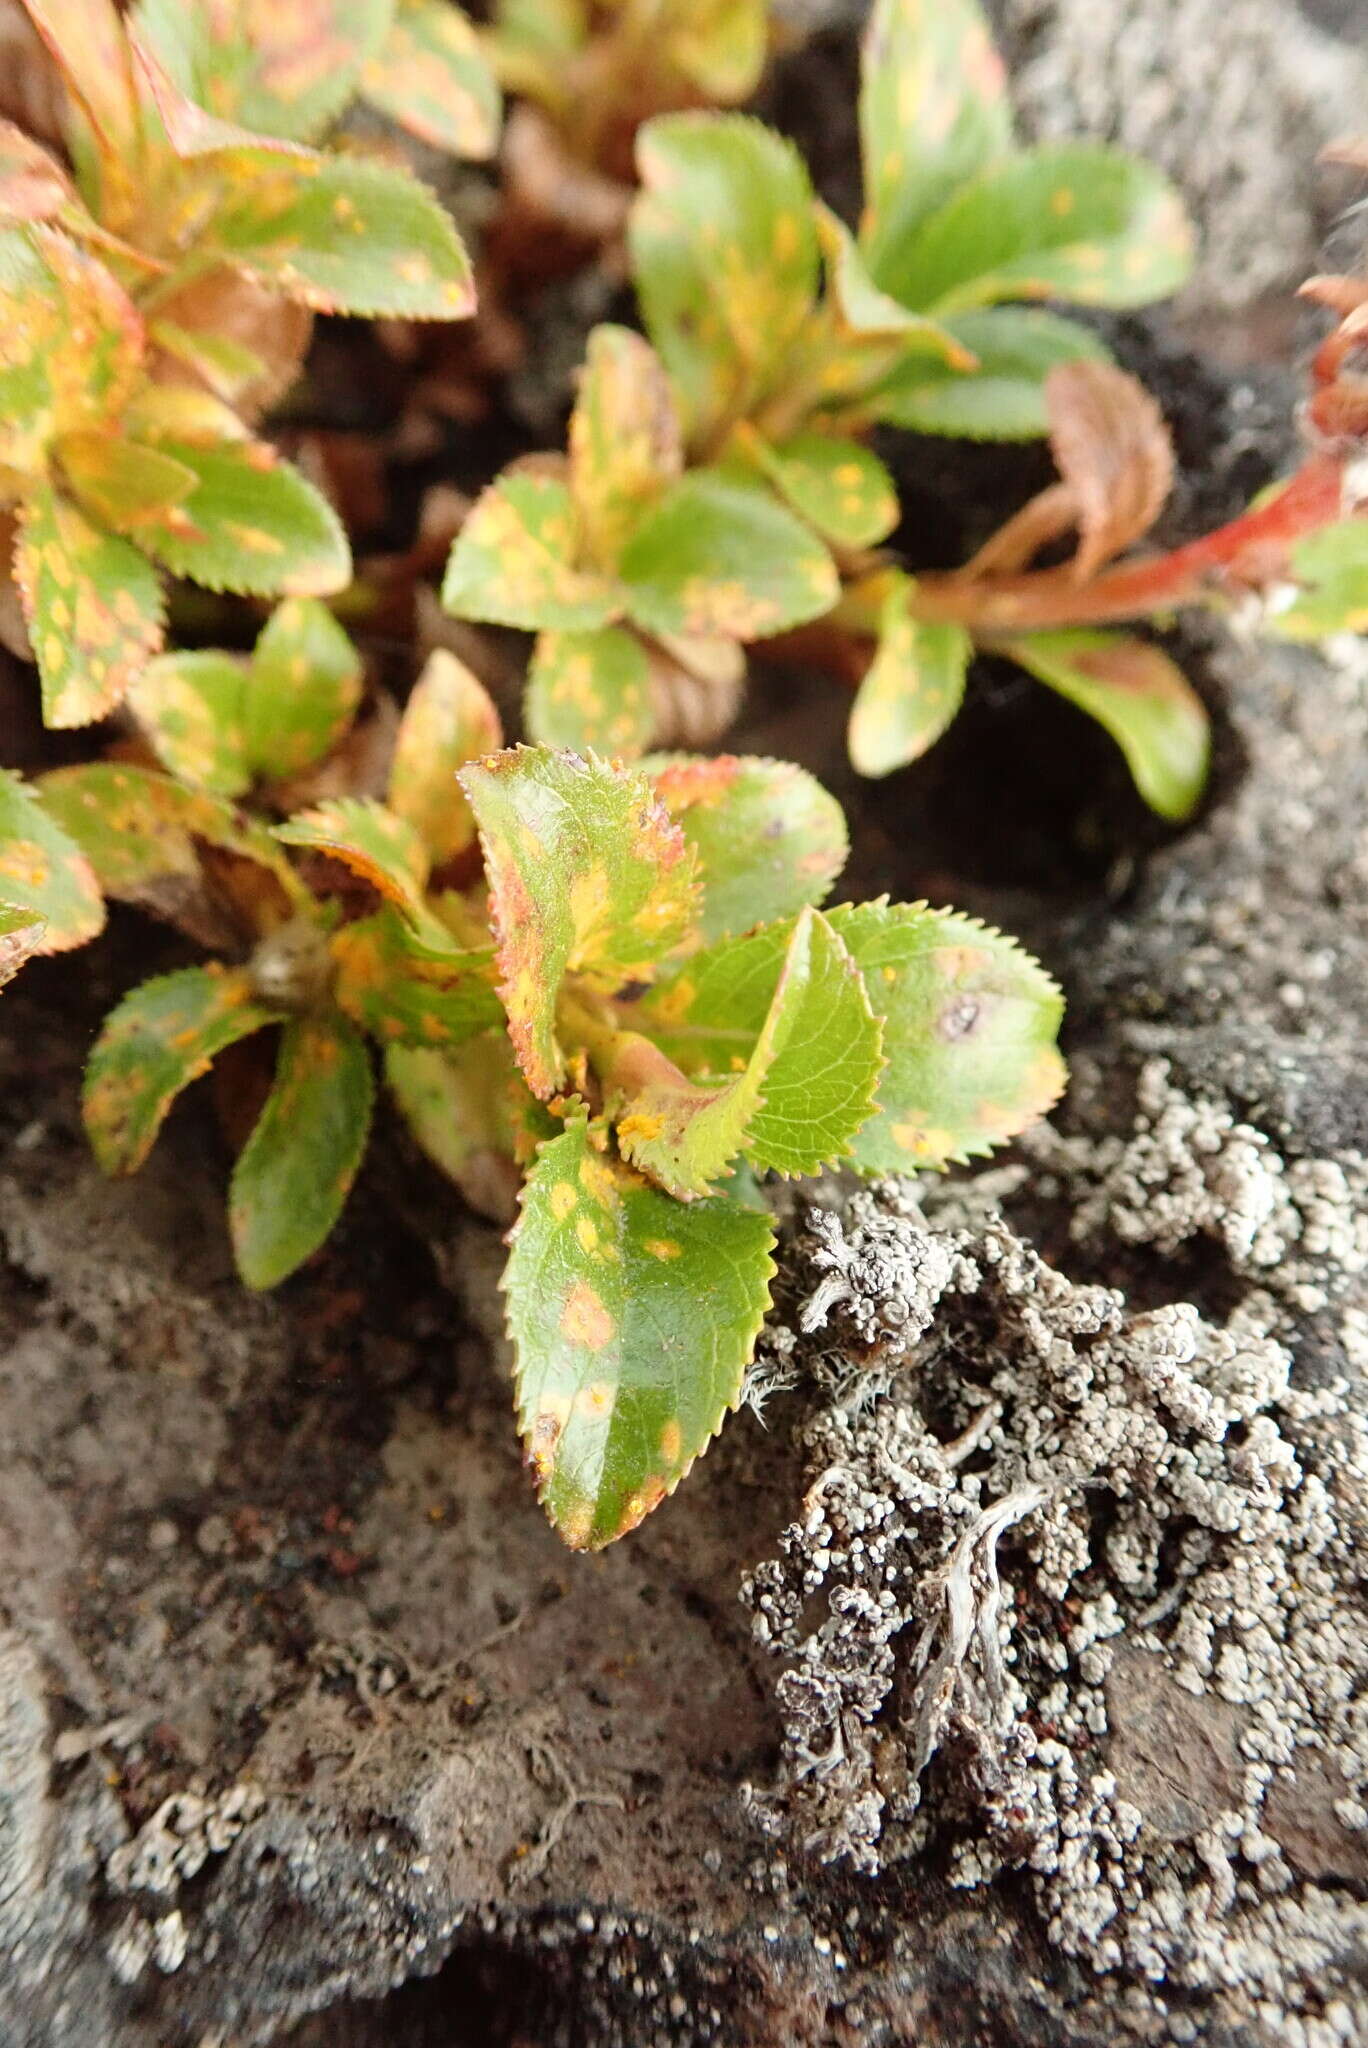 Image of Salix berberifolia subsp. tschuktschorum (A. Skvorts.) Worosch.